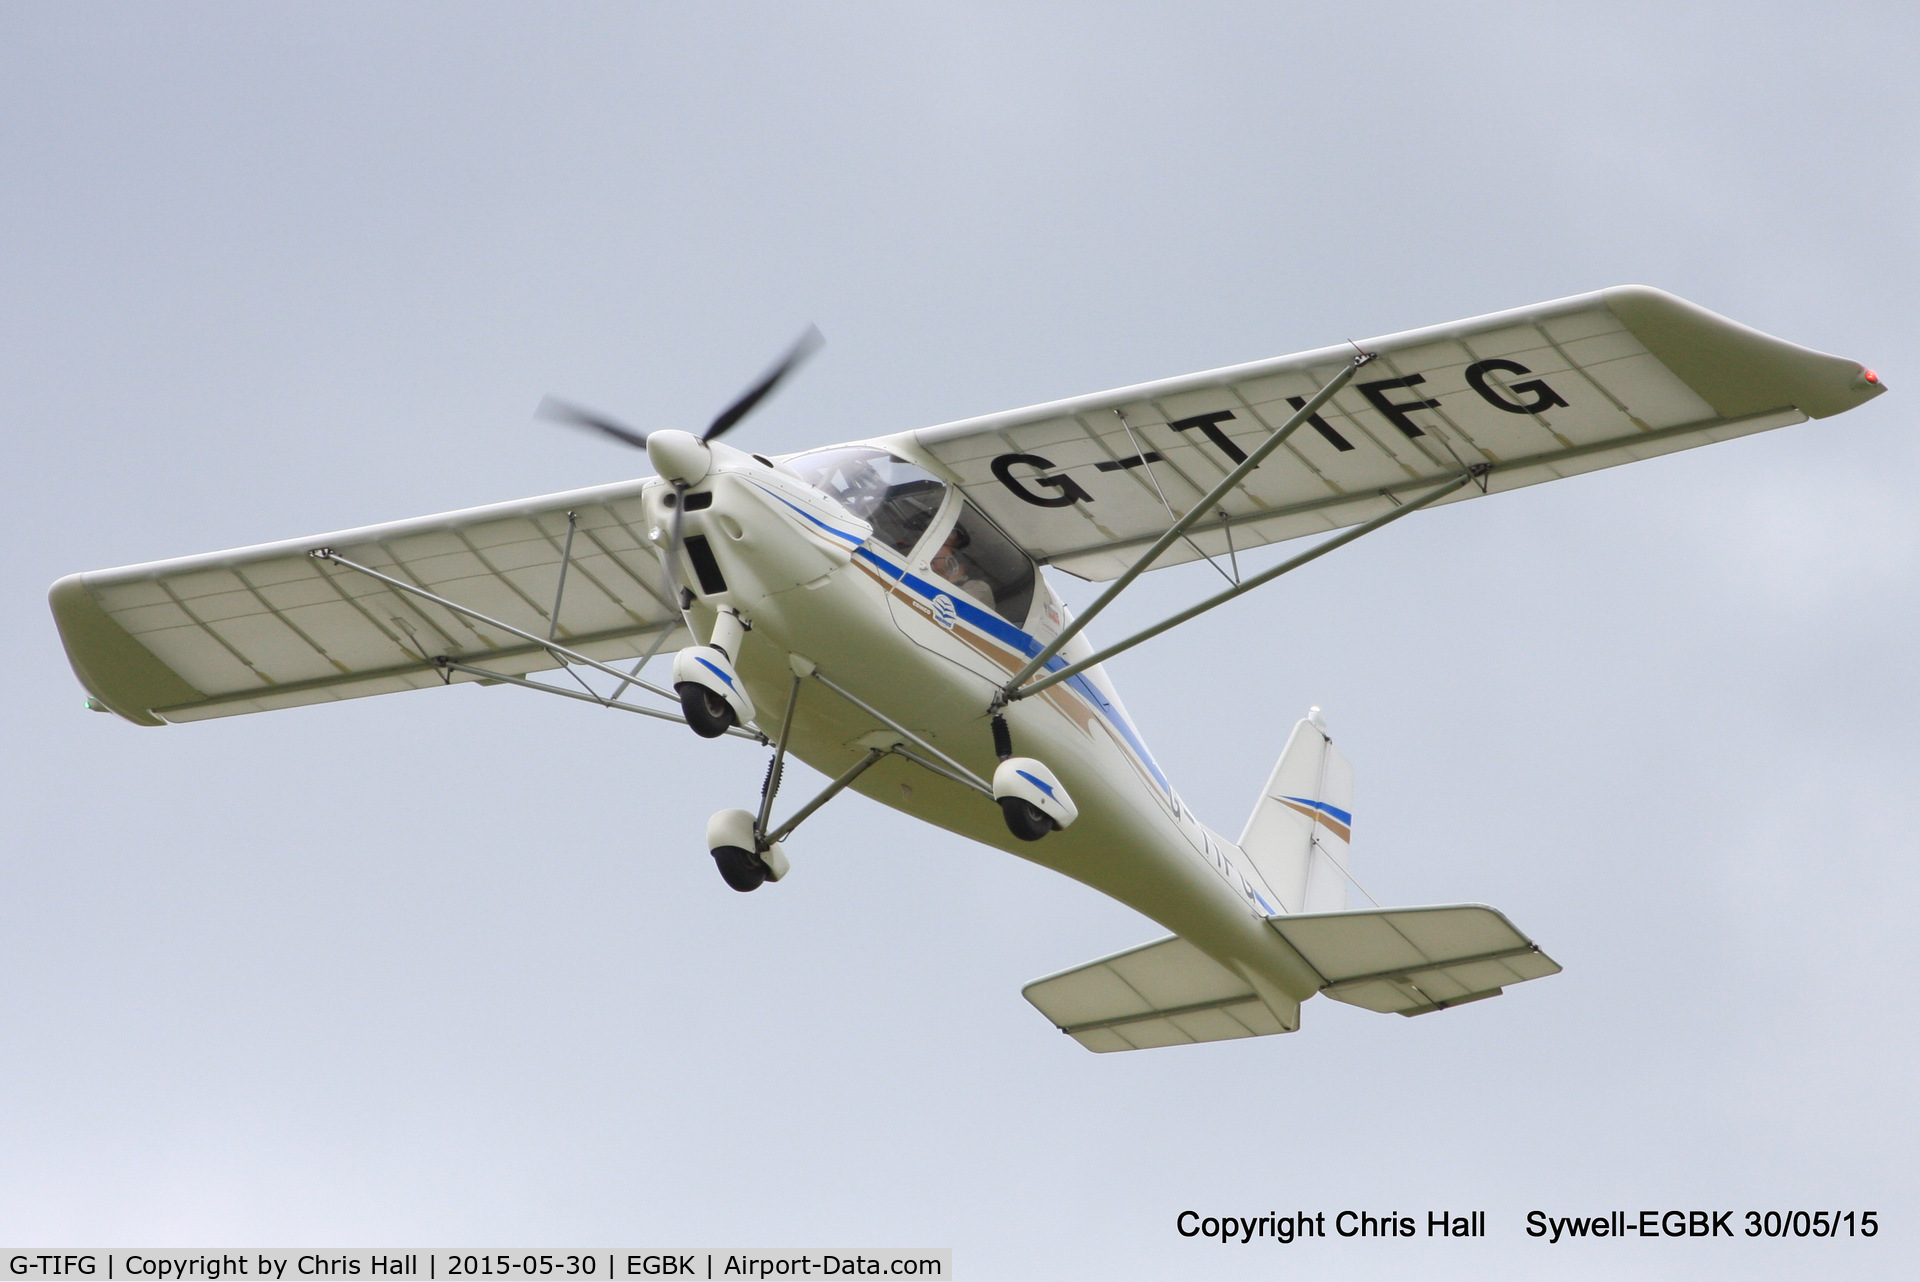 G-TIFG, 2010 Comco Ikarus C42 FB80 C/N 1009-7119, at Aeroexpo 2015